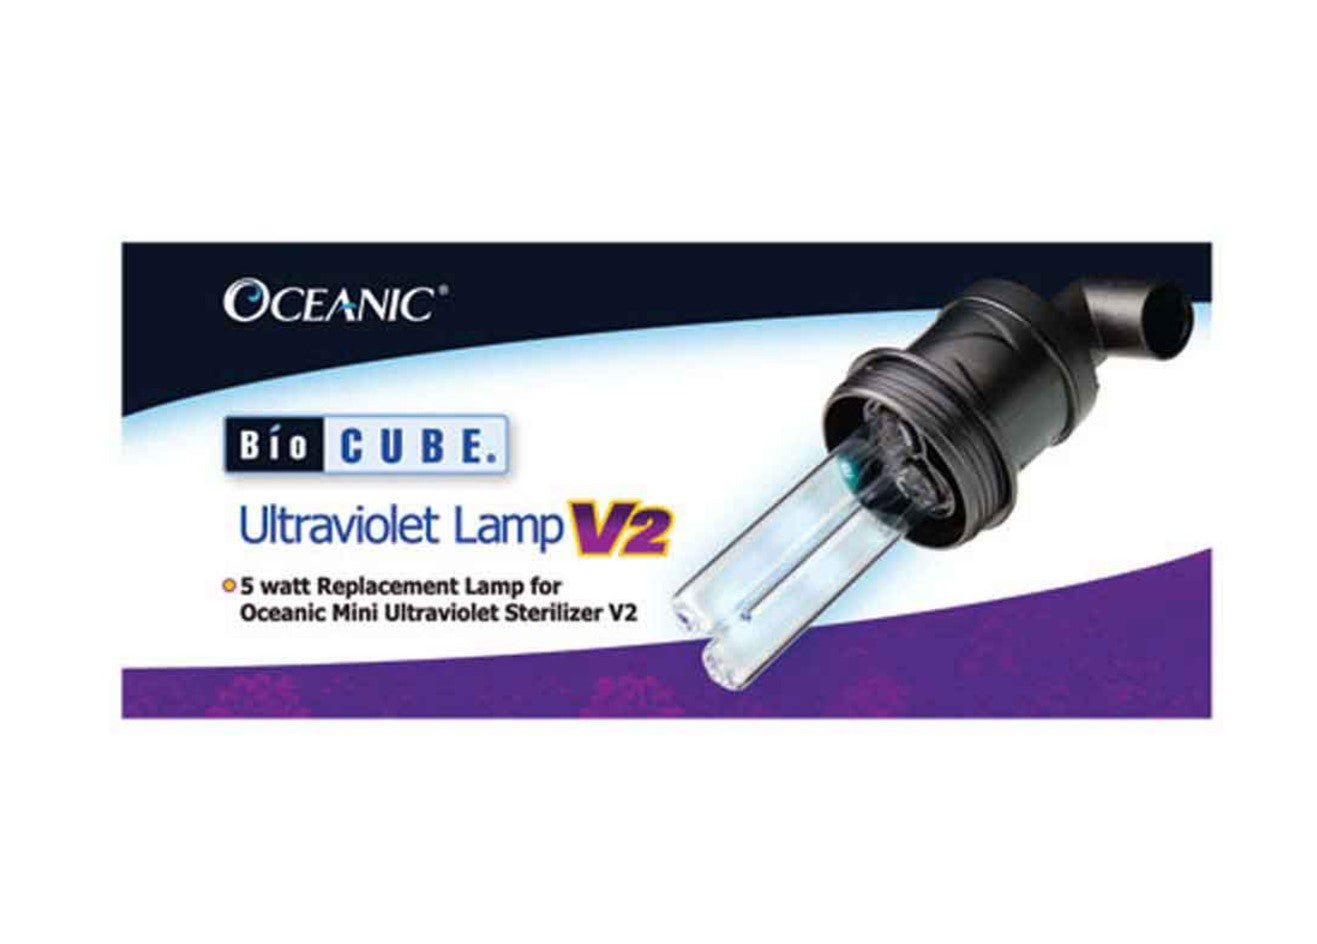 Coralife & Oceanic BioCube 5 Watt UV Replacement Lamp Part # 15641